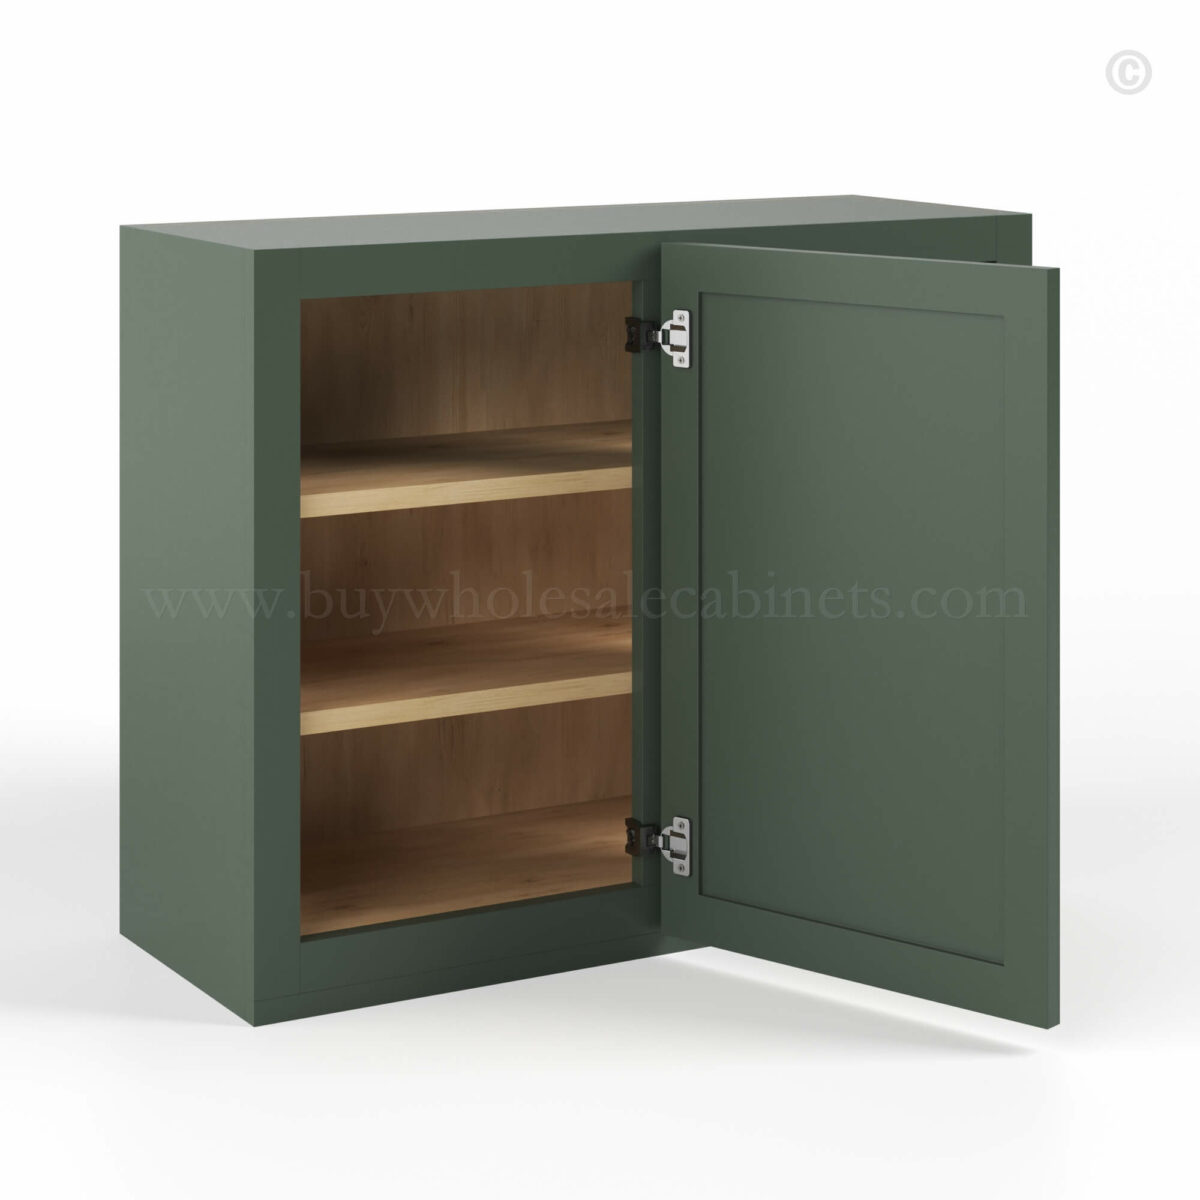 Slim Shaker Green Wall Blind Corner Cabinet, rta cabinets, wholesale cabinets